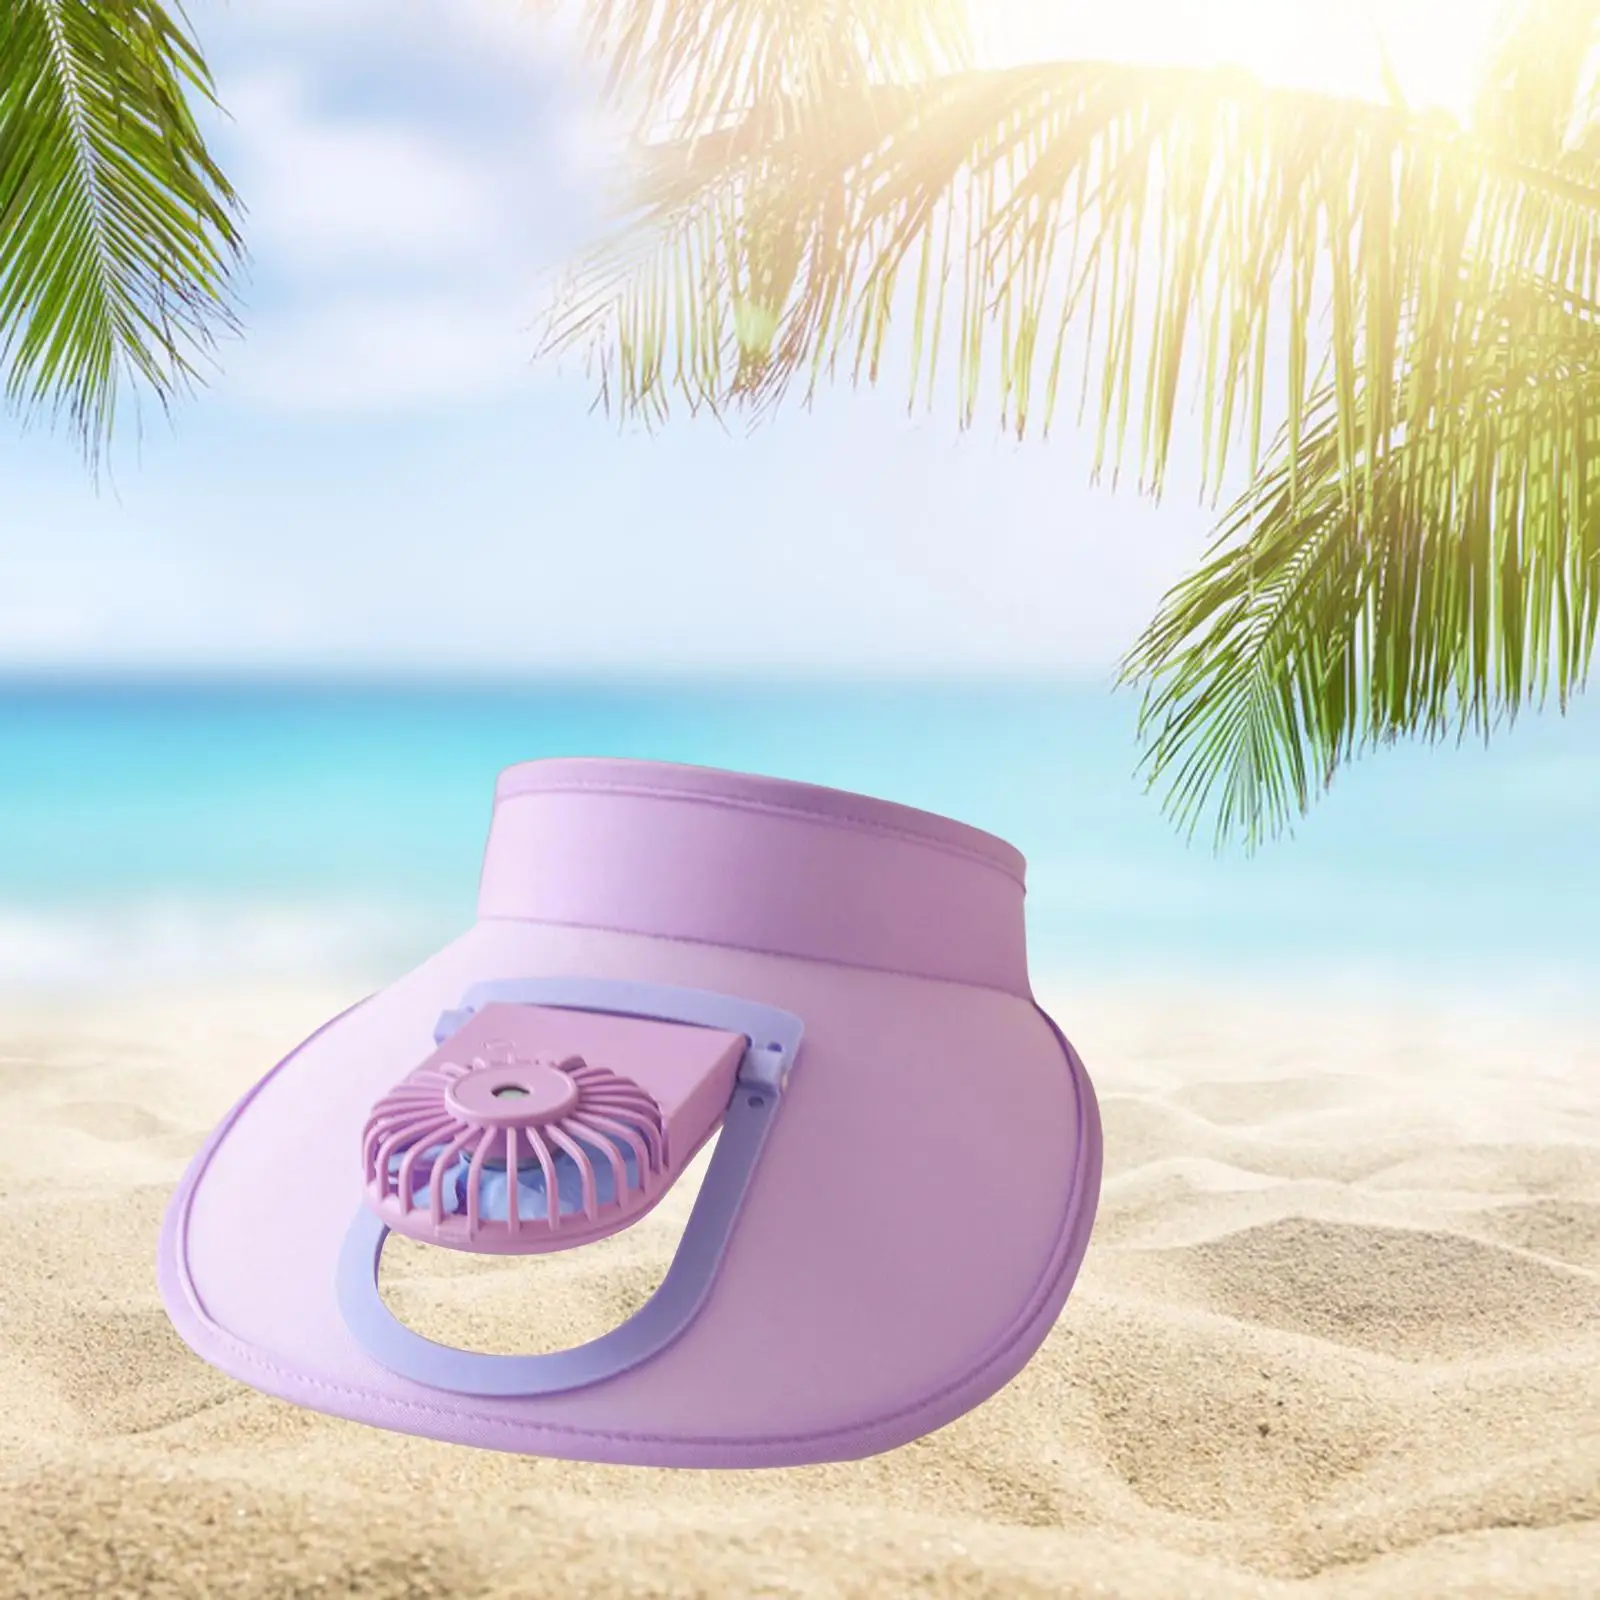 Sun Visor Hat with Fan, Fan Visor HatSummer Beach Hat for Adult Kids USB Powered Cooling Fan Hat for Hiking Outdoor Sports